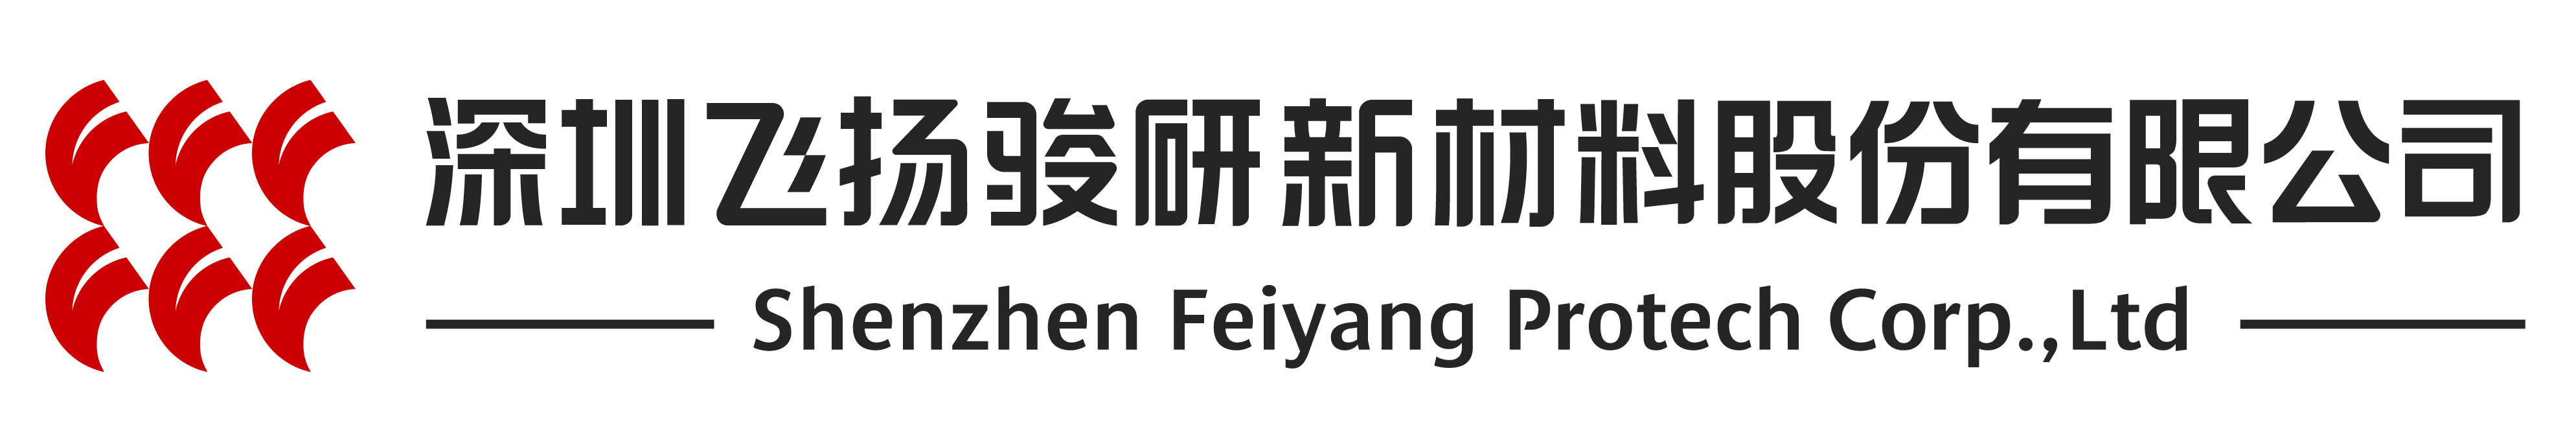 Shenzhen Feiyang Protech Corp., Ltd._logo